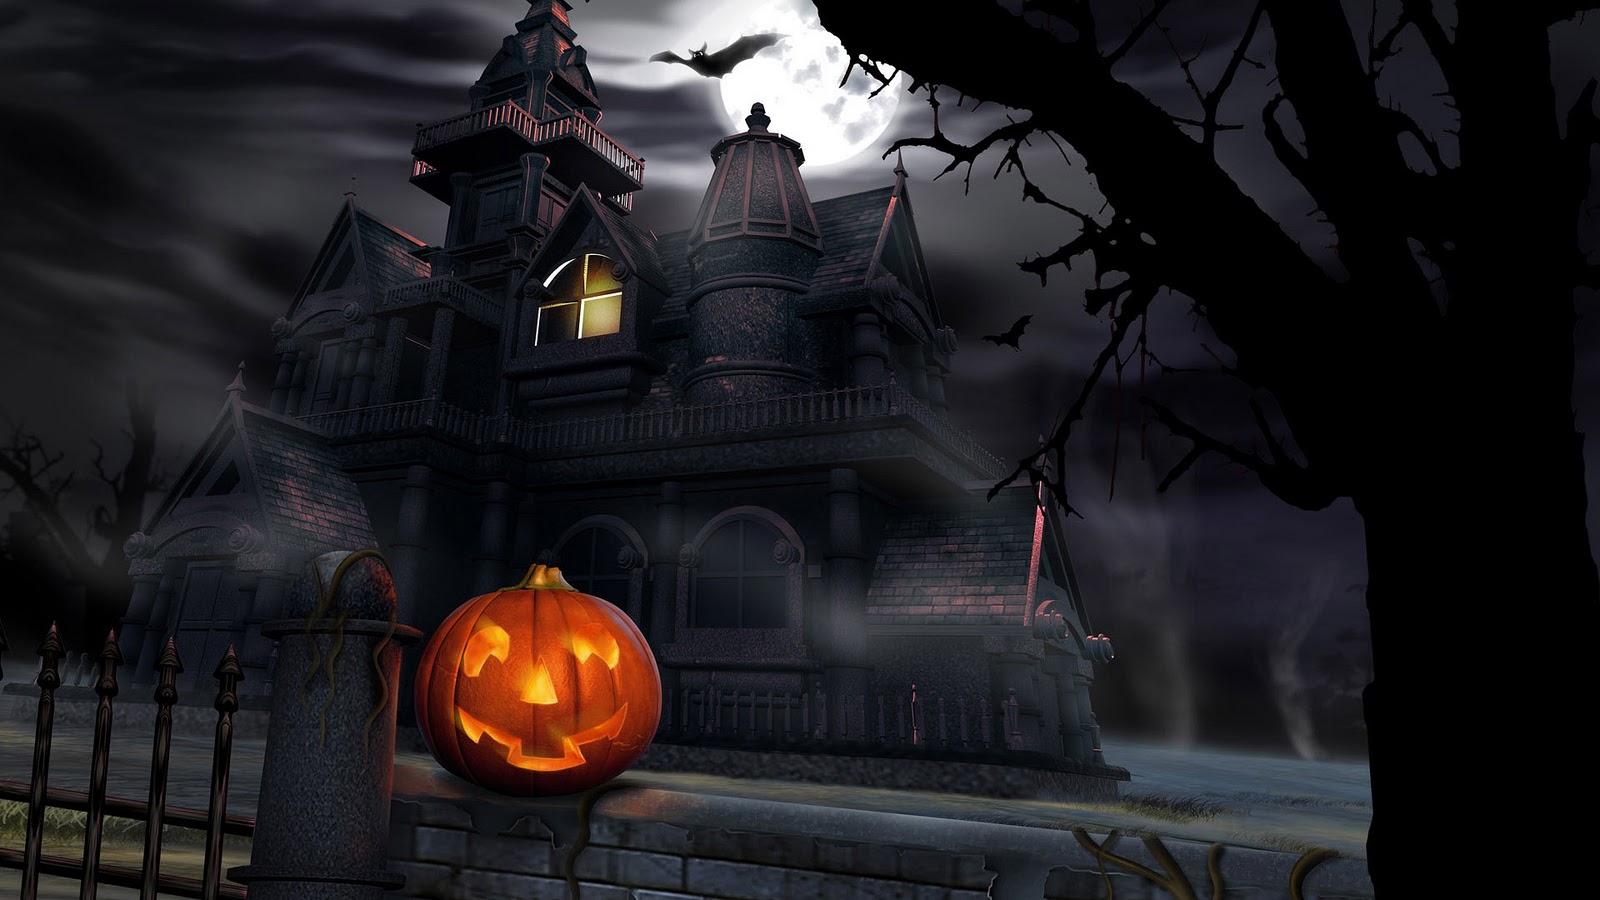 https://blogger.googleusercontent.com/img/b/R29vZ2xl/AVvXsEjchu_3J8xwX0SDeavxDyP-h74mPeNWeH7hJPeKH6bqCGgY75mDD1Rs0B2chvRoInVpzGafpqDqw1jzHuYEU8Ue30HVPPgQLtRZhUX9tDXKTjv3tsc7FTvN35aLDCo7PXdcvC1glJgWdJk/s1600/Halloween-desktop-Wallpapers-HD-psupero-images-1.jpg